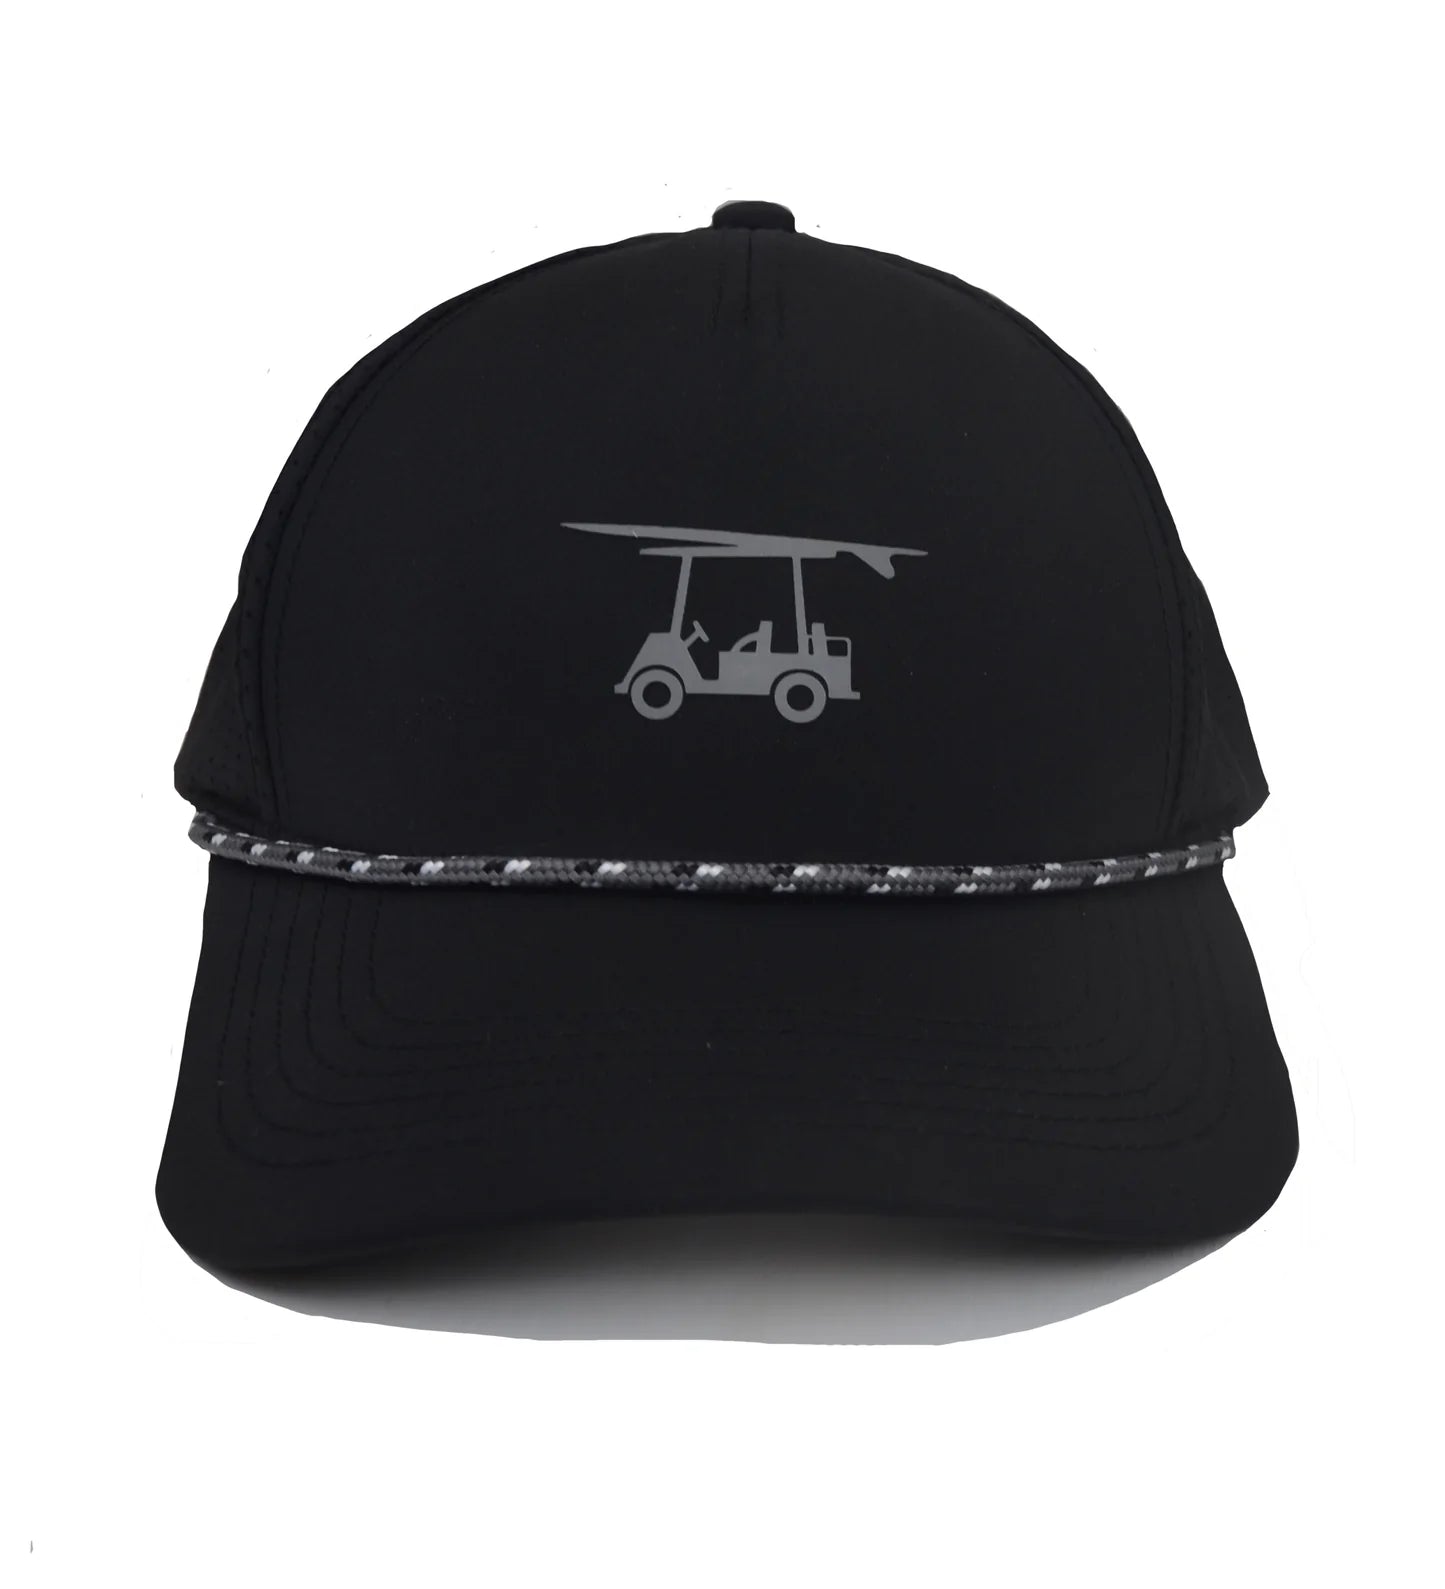 Roped Performance Hat-black w grey, black and white rope-RPERFHAT-B-Baldhead blues